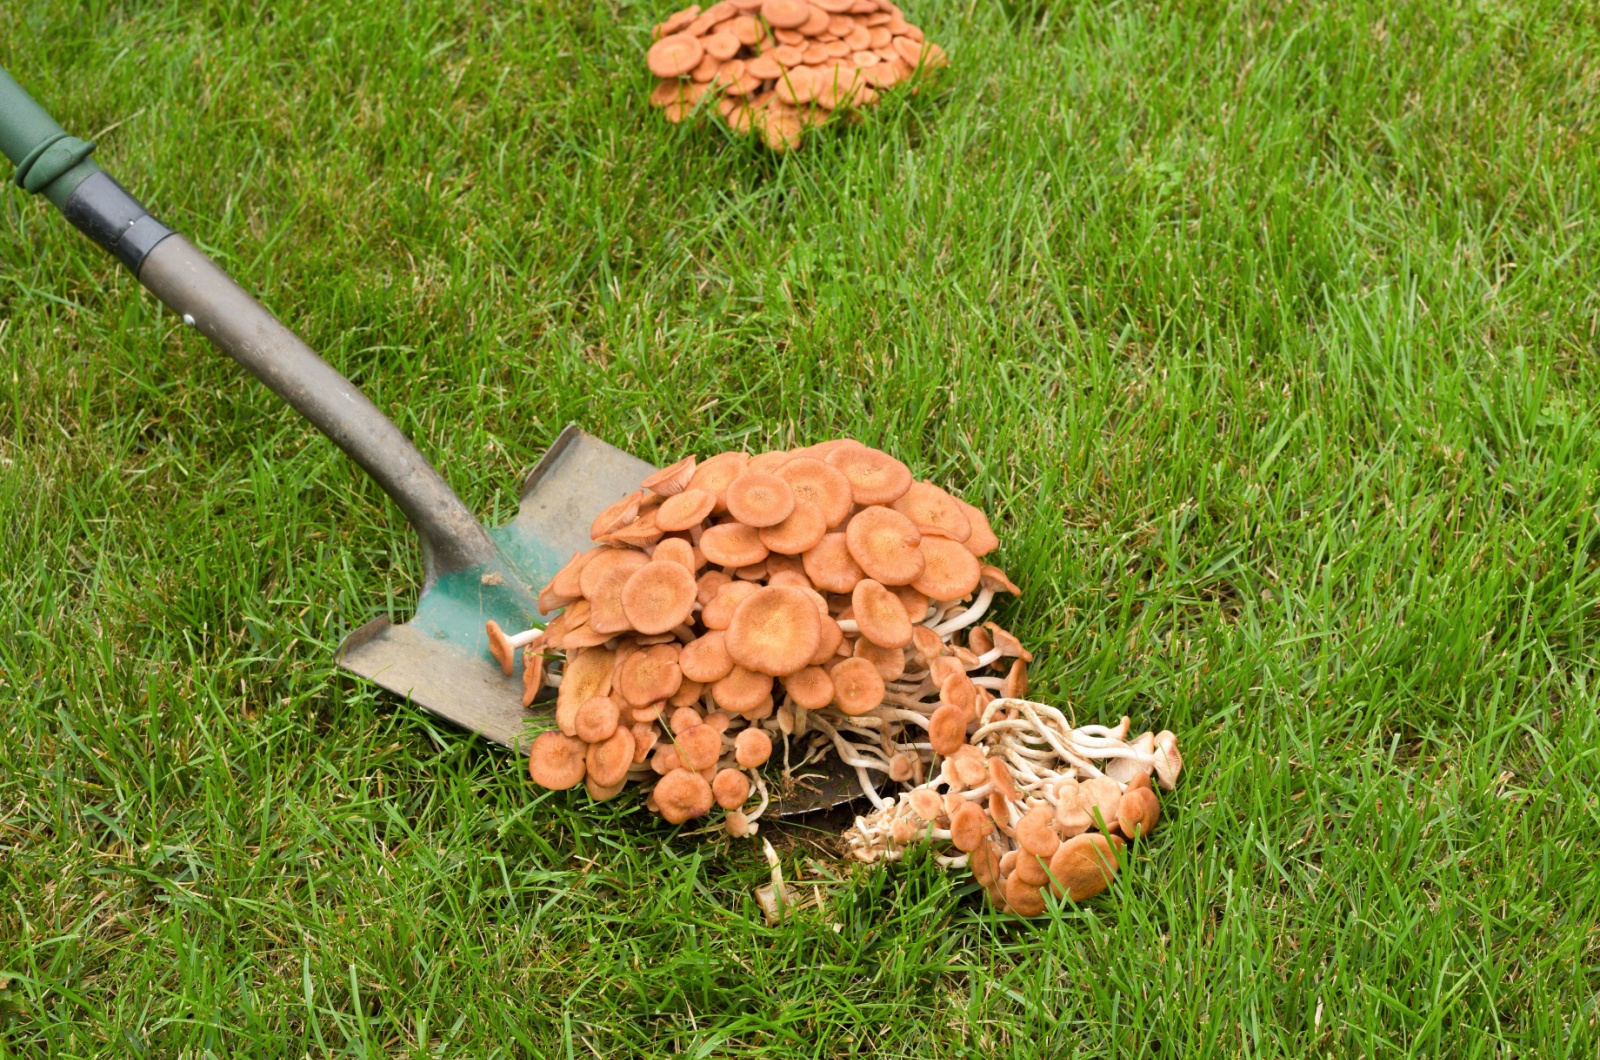 removing mushrooms